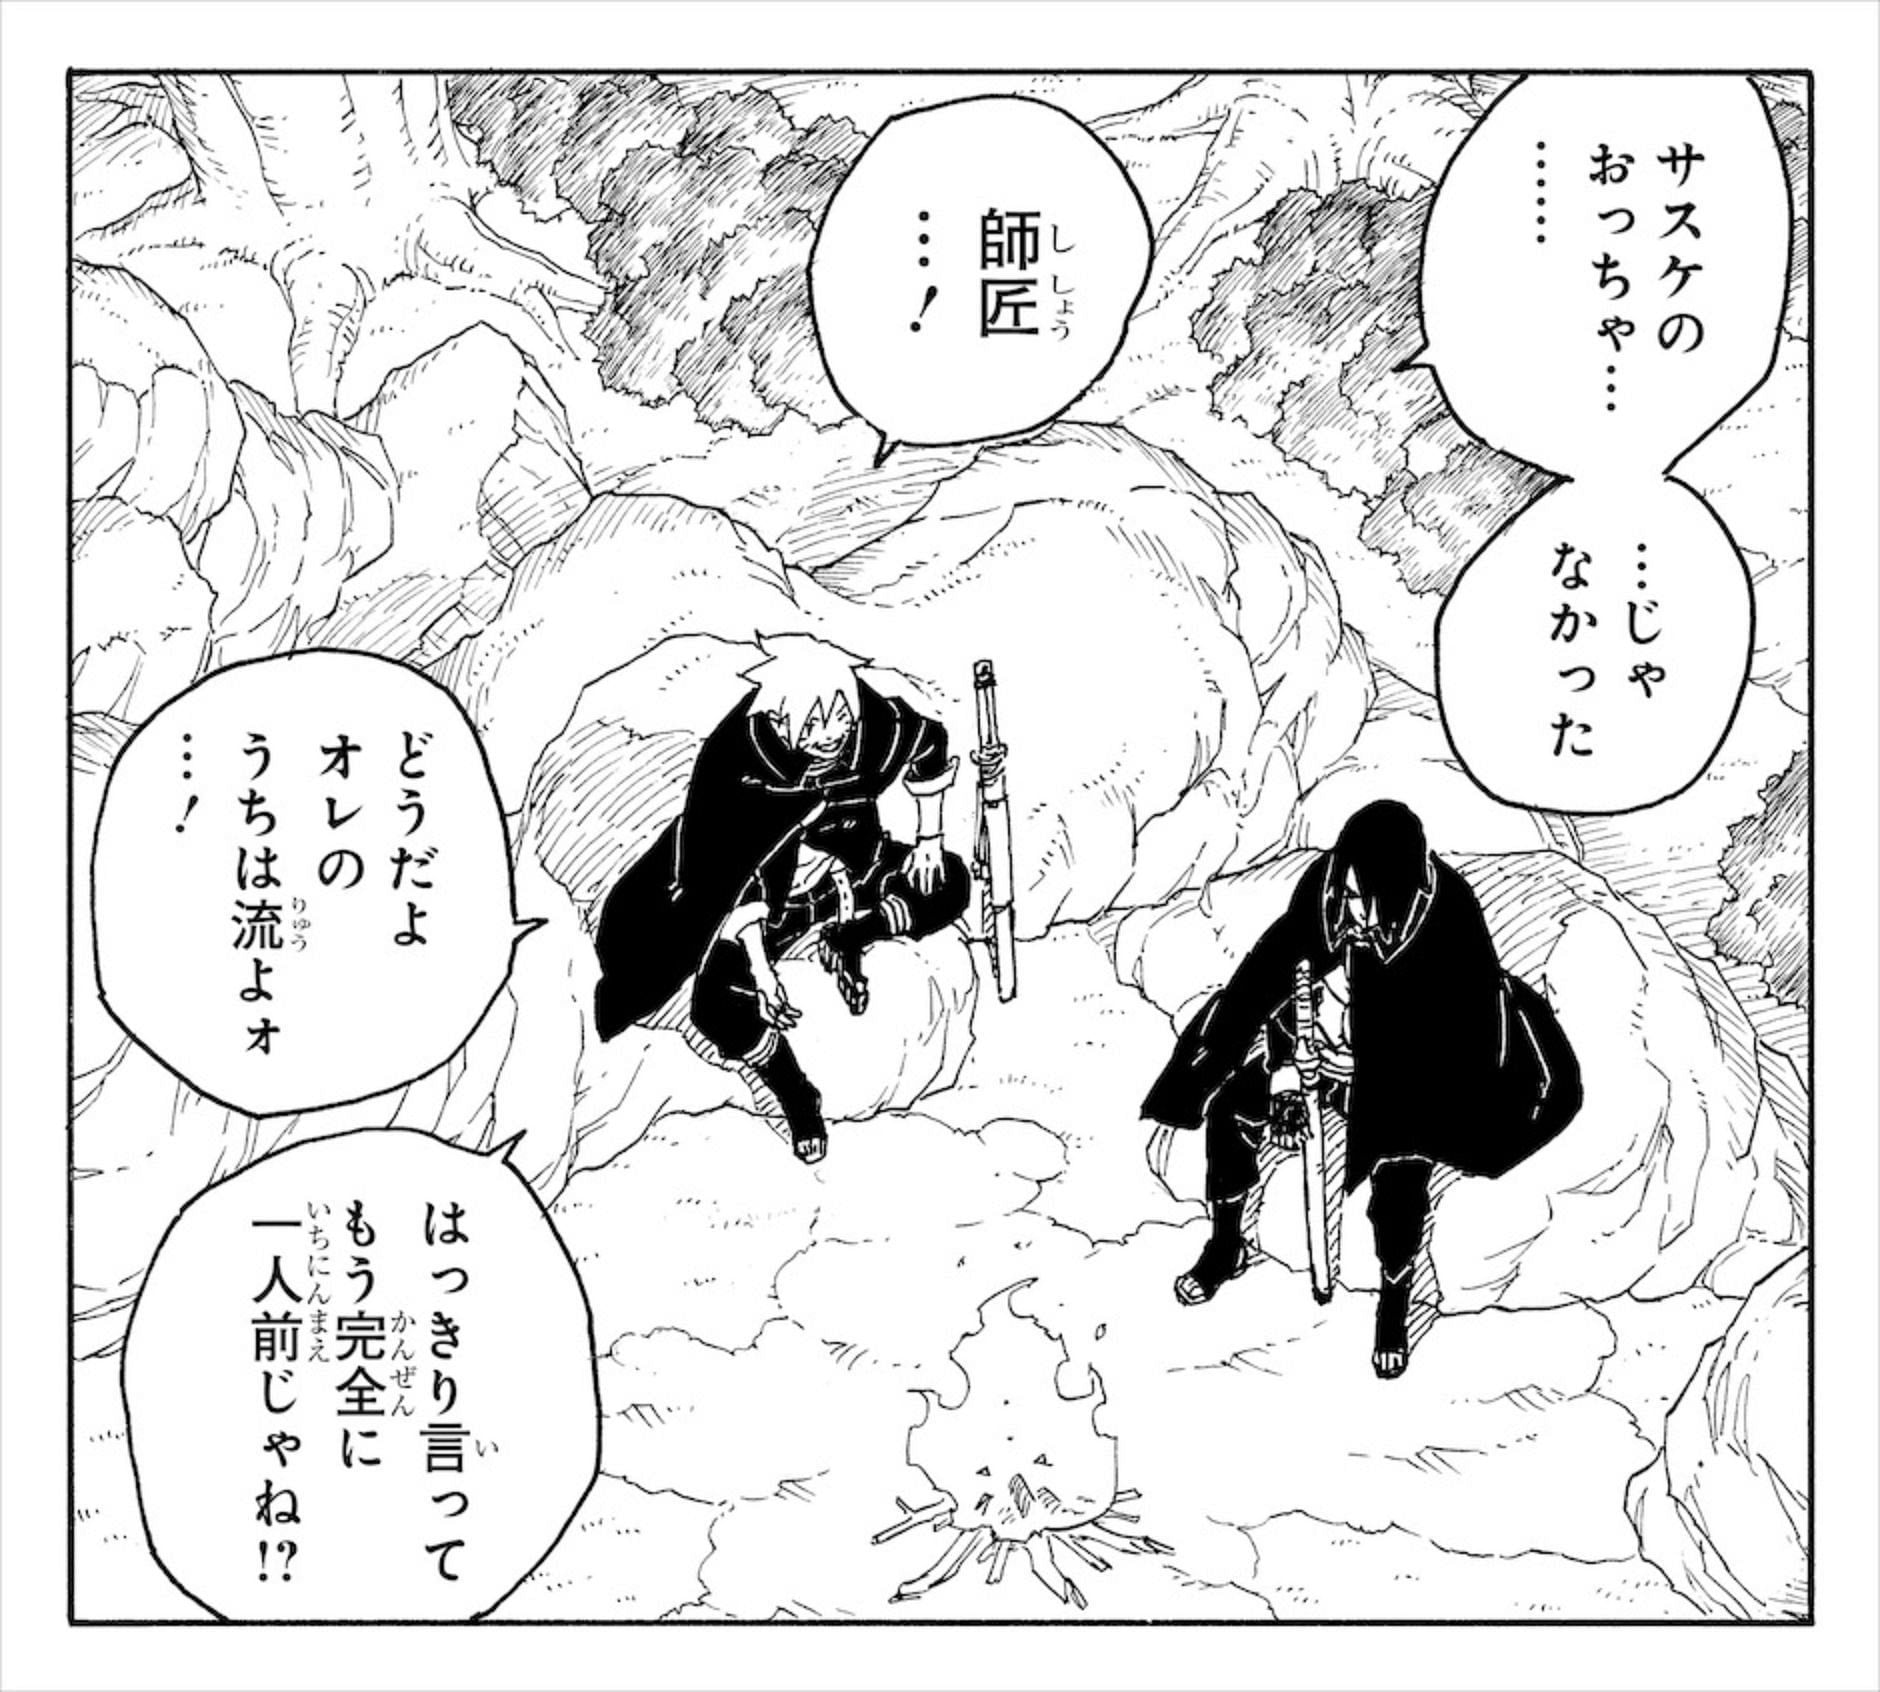 Boruto and Sasuke as seen in Boruto: Two Blue Vortex chapter 5 preview (Image via Shueisha)